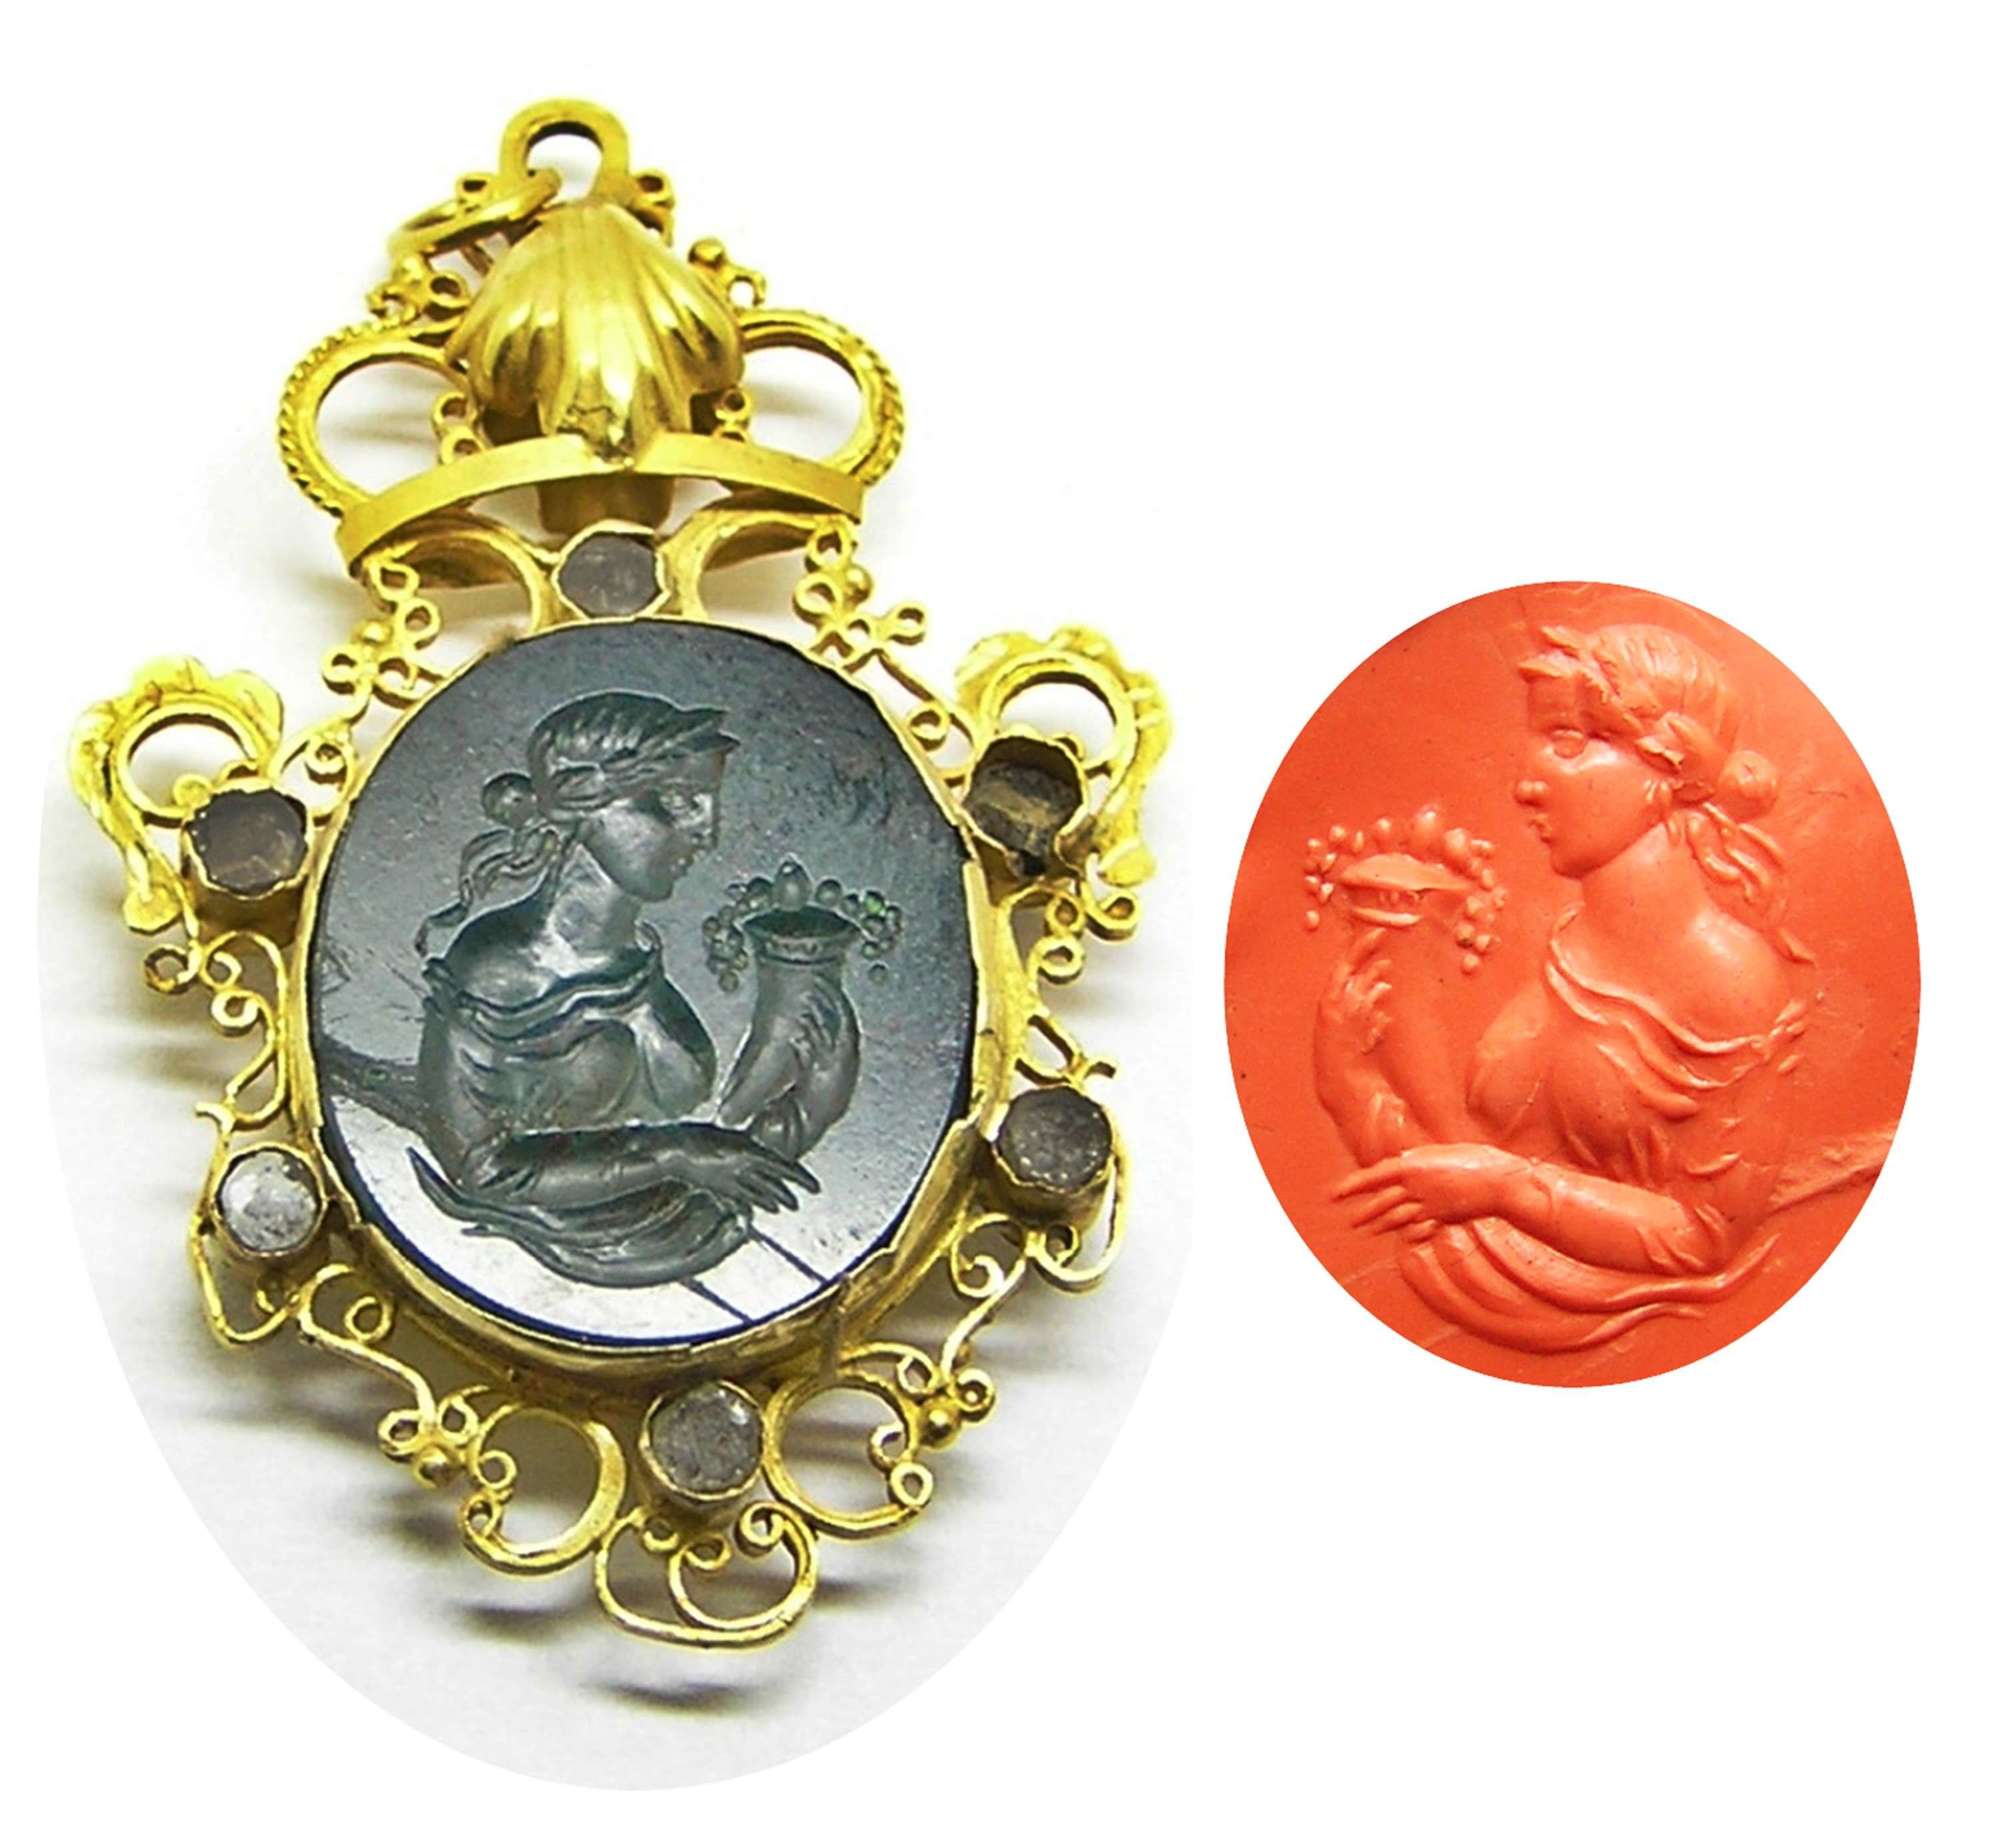 Renaissance Revival agate intaglio of Fortuna in 18k gold pendant